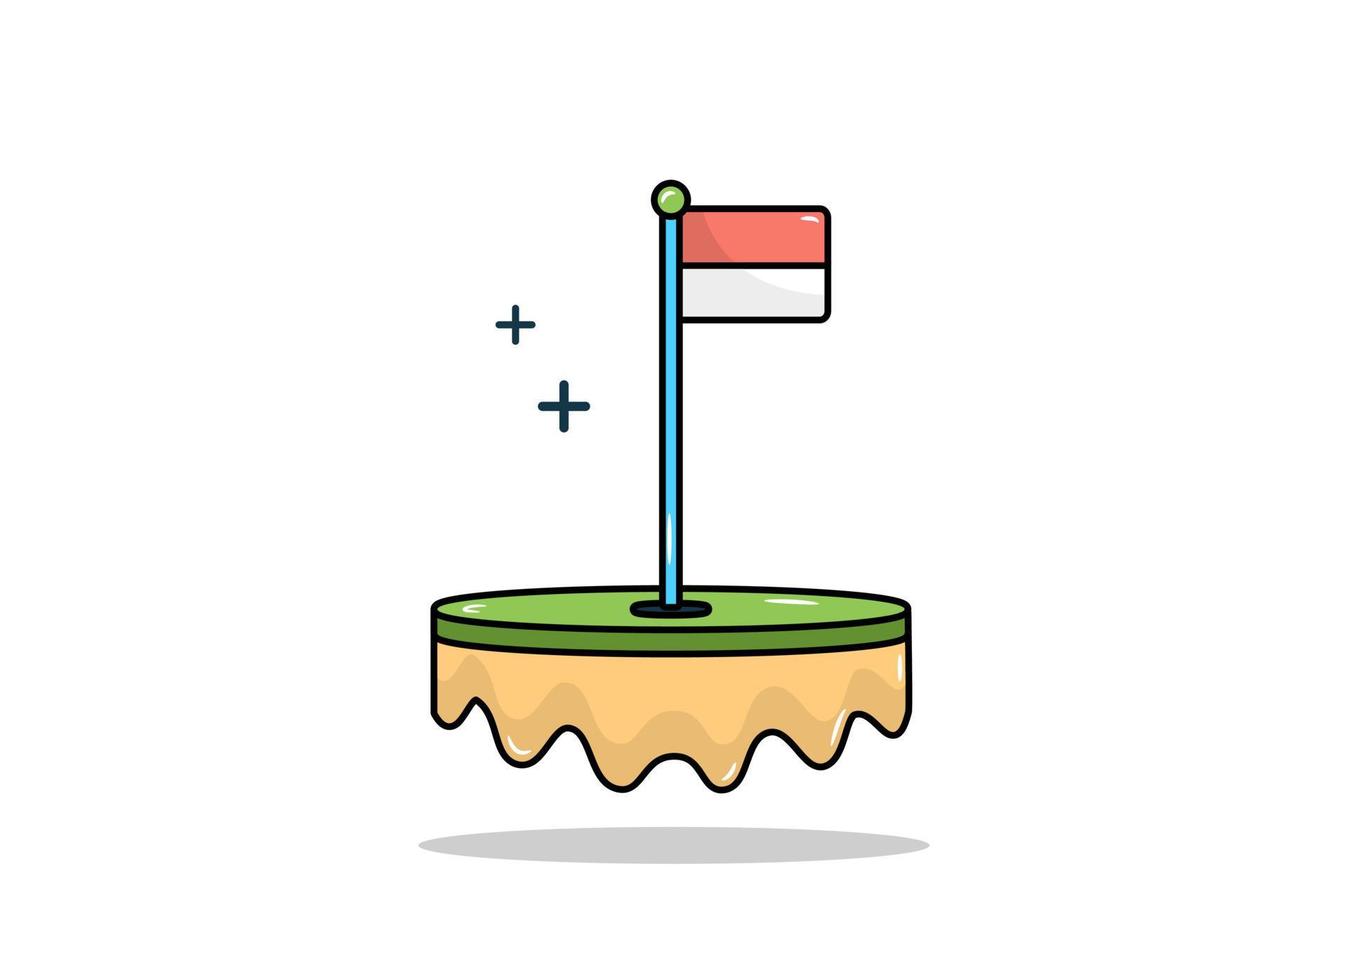 Indonesisch vlag vlak ontwerp schets stijl schattig vector